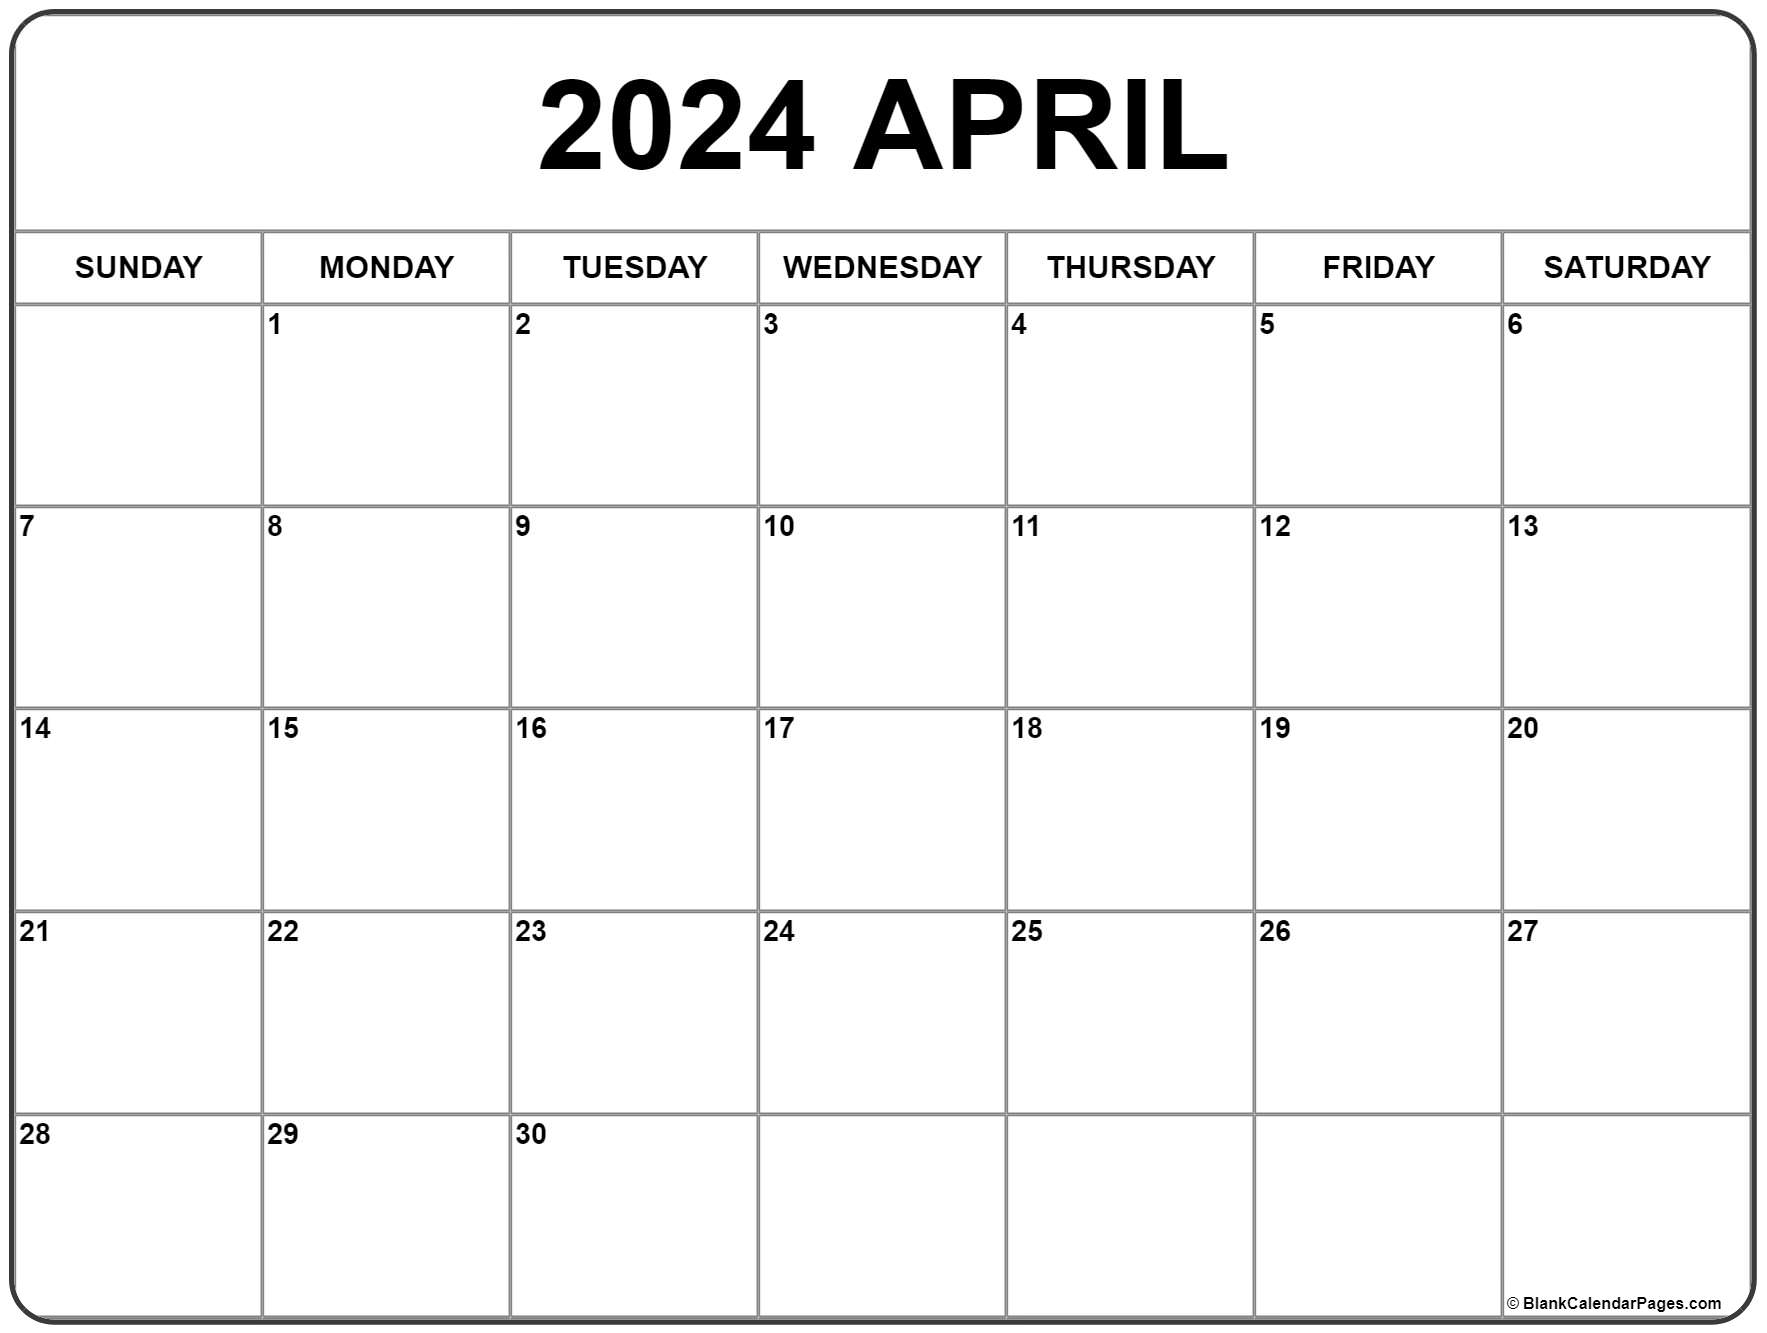 April 2024 Calendar | Free Printable Calendar intended for Calendar 2024 April Month